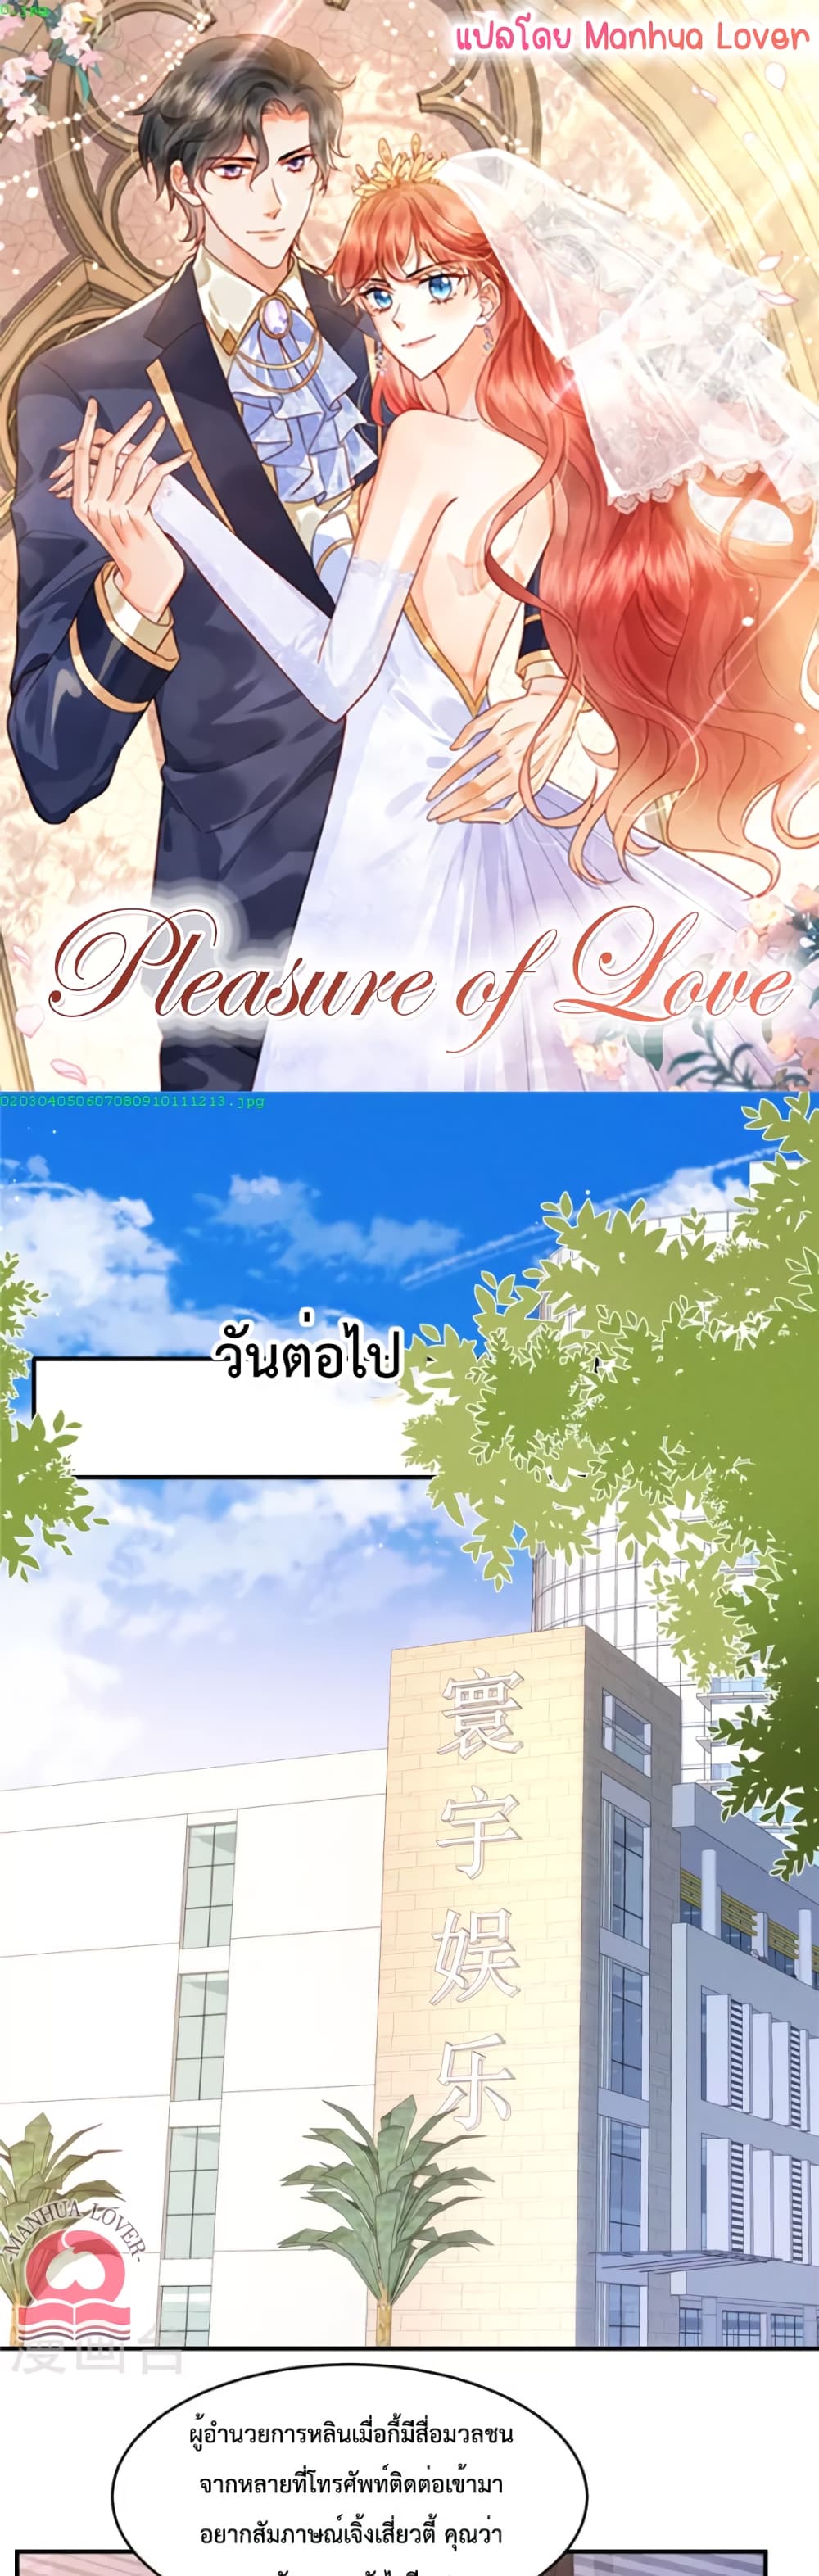 Pleasure of Love 33 01